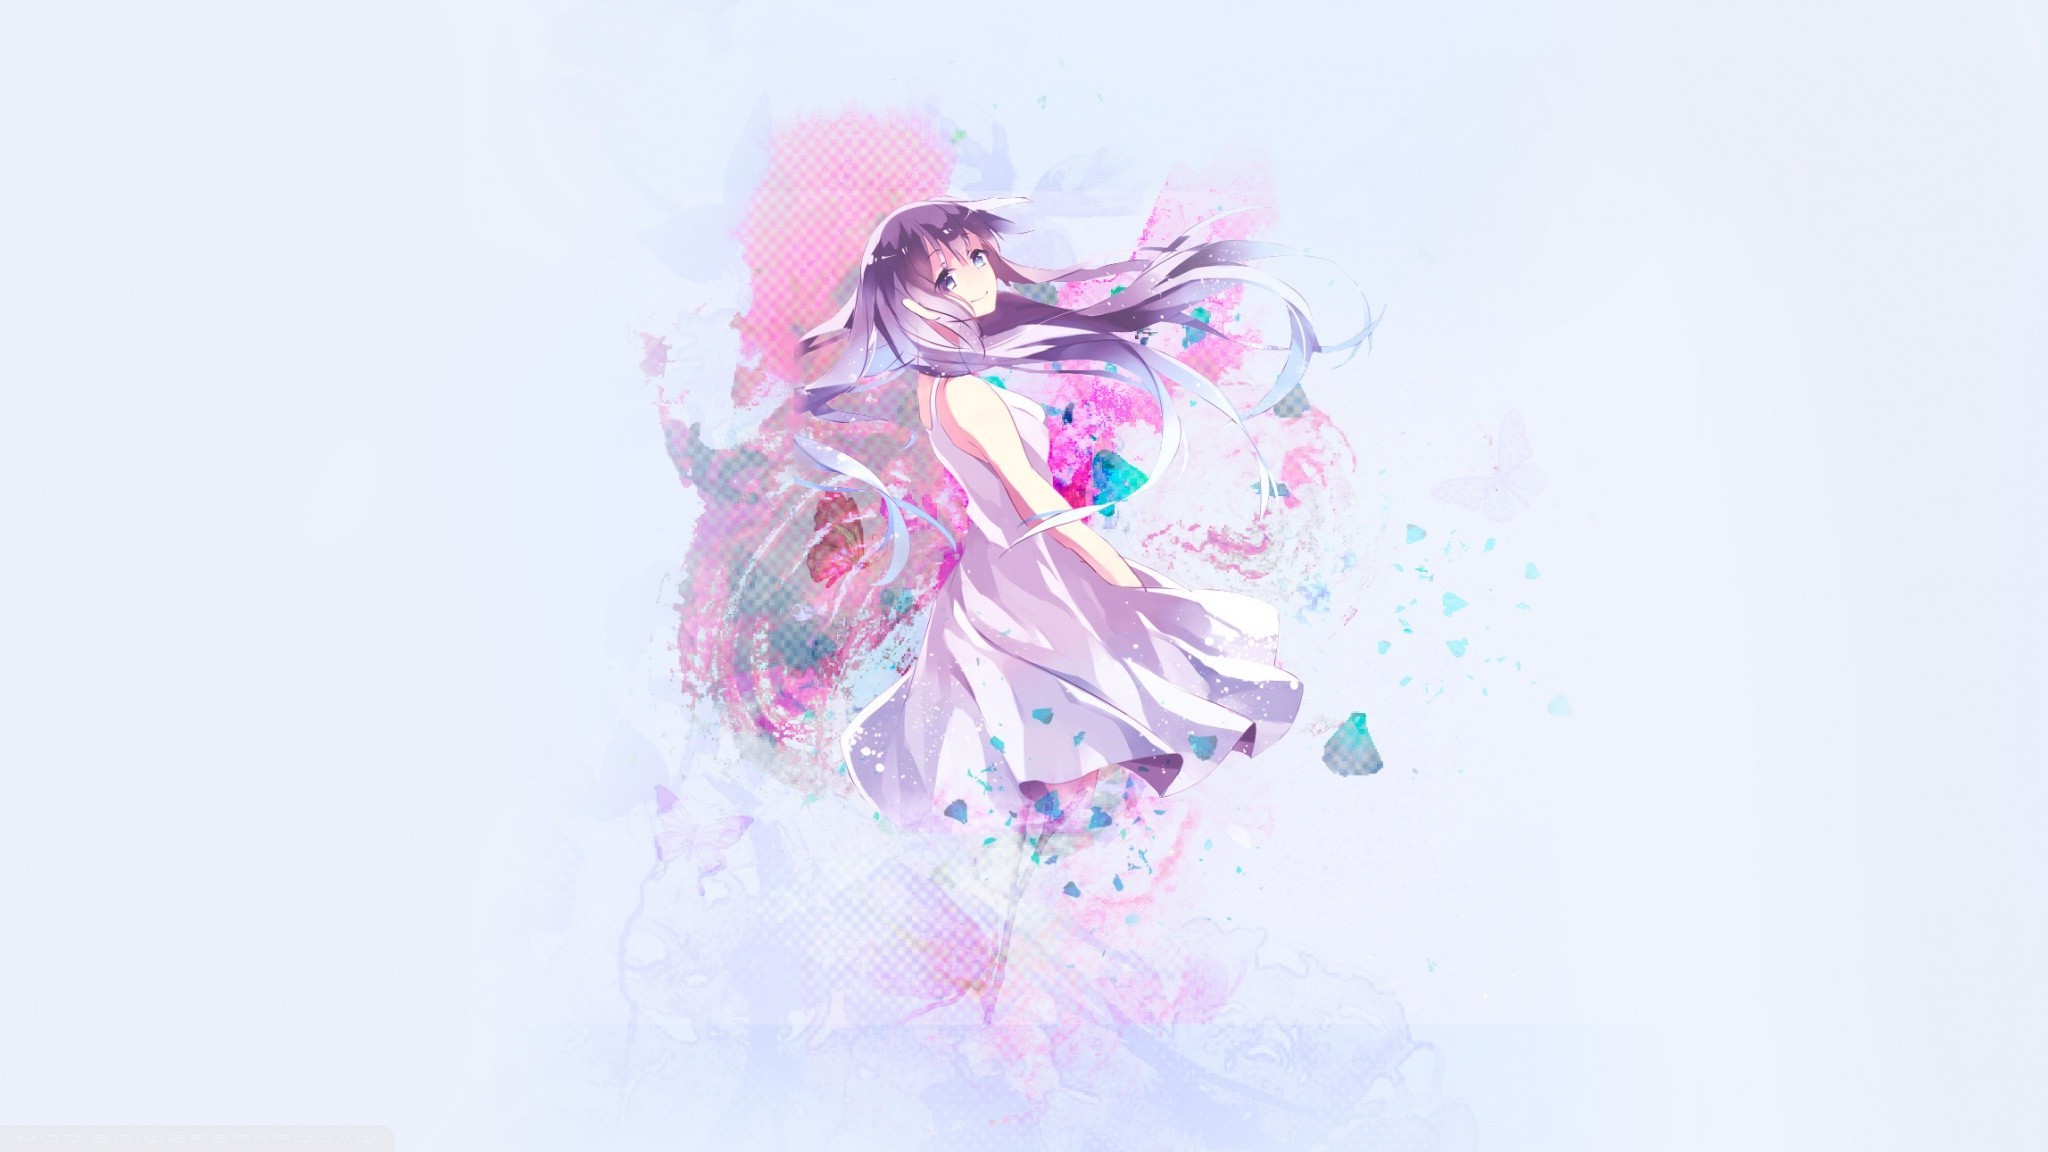 Wallpaper : drawing, illustration, anime girls, purple, original characters, pink, flower, petal, sketch, 2048x1152 px 2048x1152